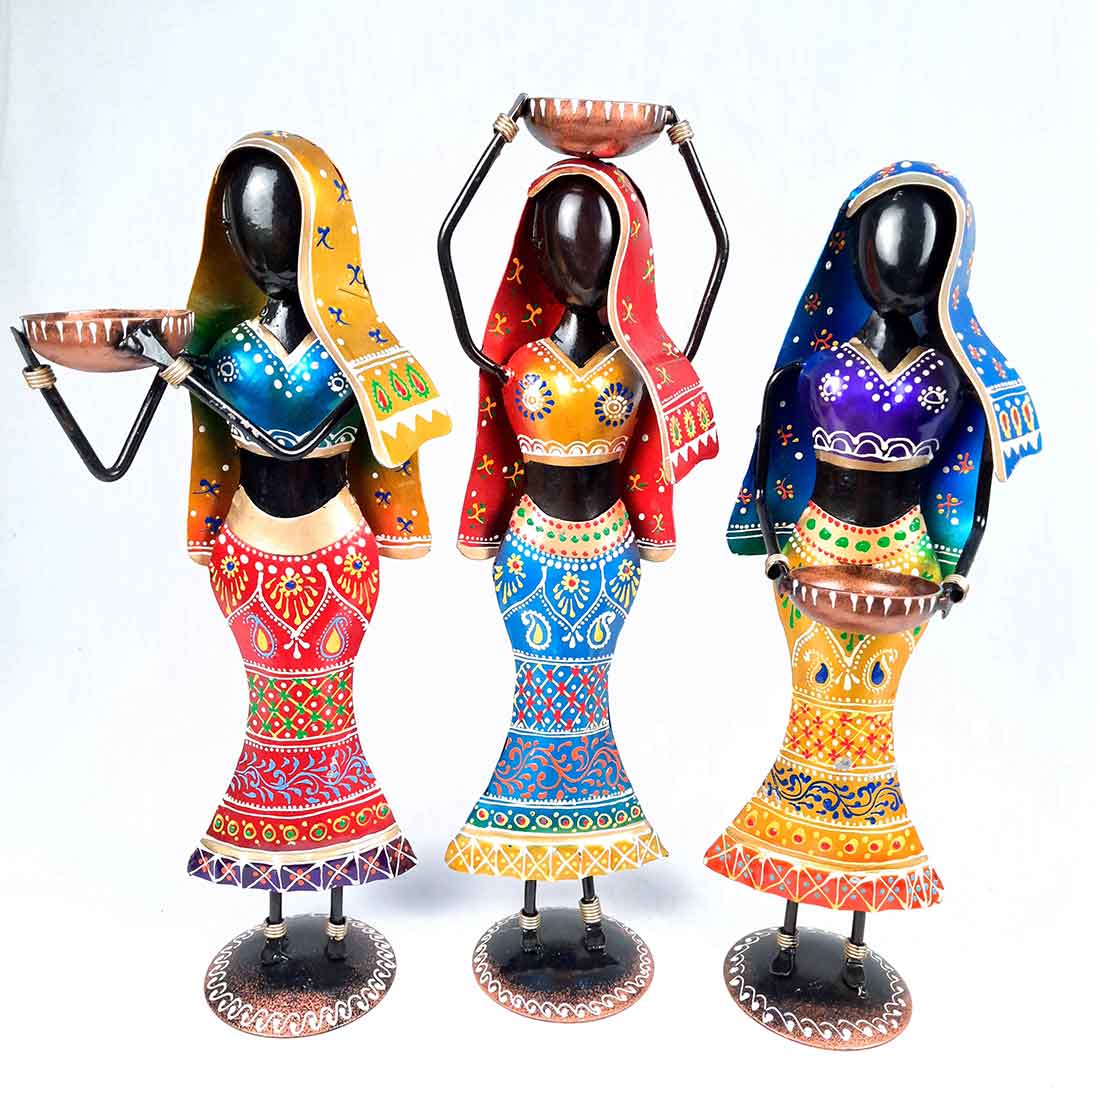 Lady Worker Set - Female Figurines - For Side Table Decoration - 14 Inch - Set of 3 - ApkaMart